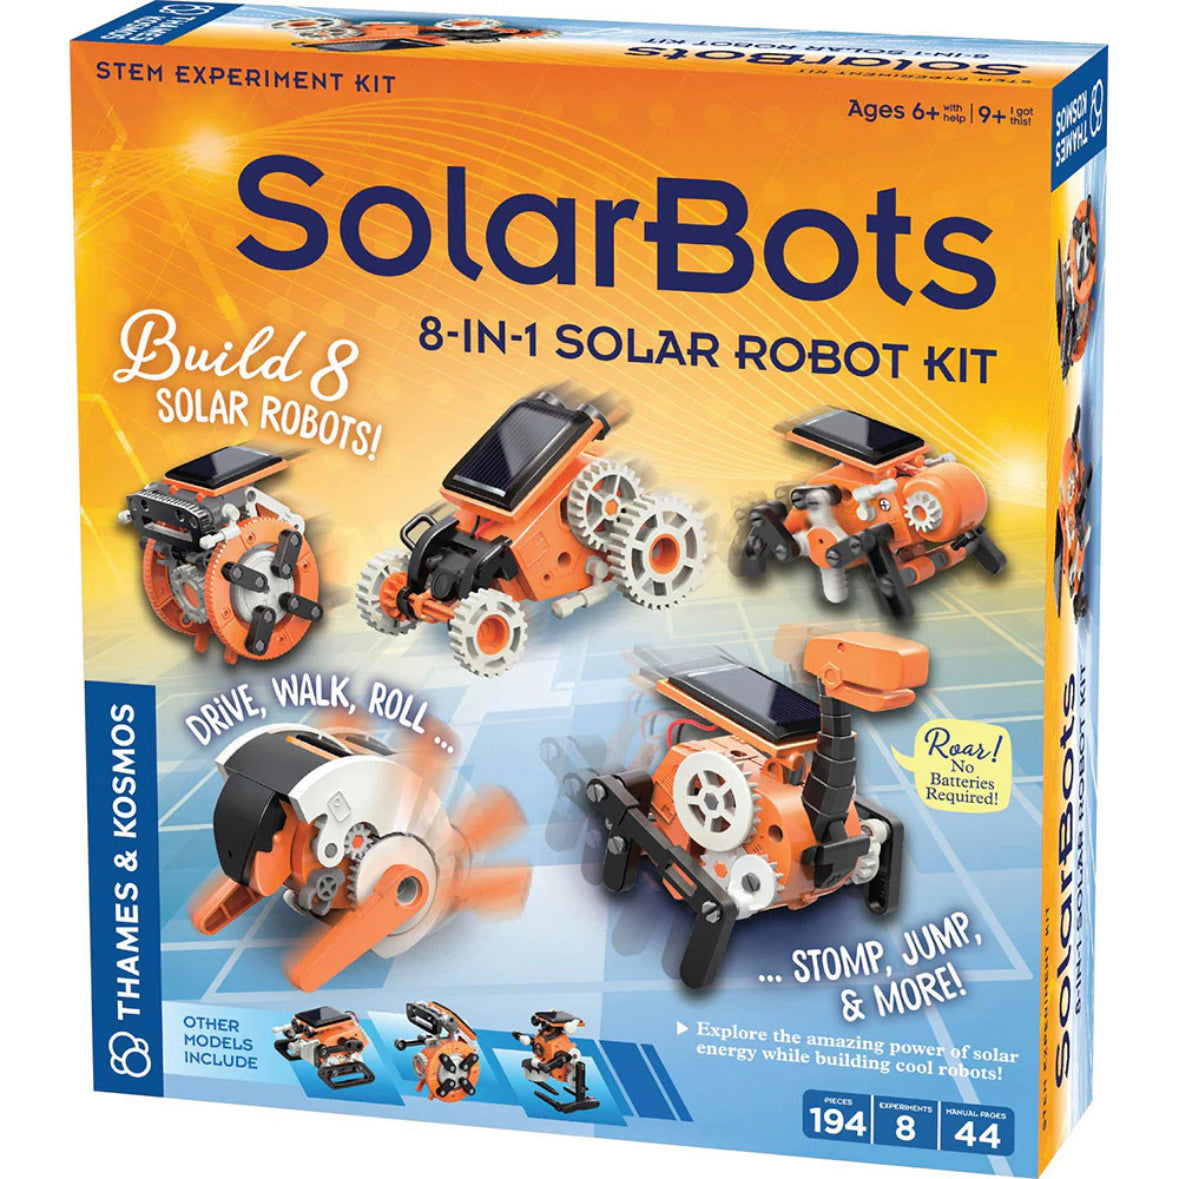 8 in 1 solar robot kit